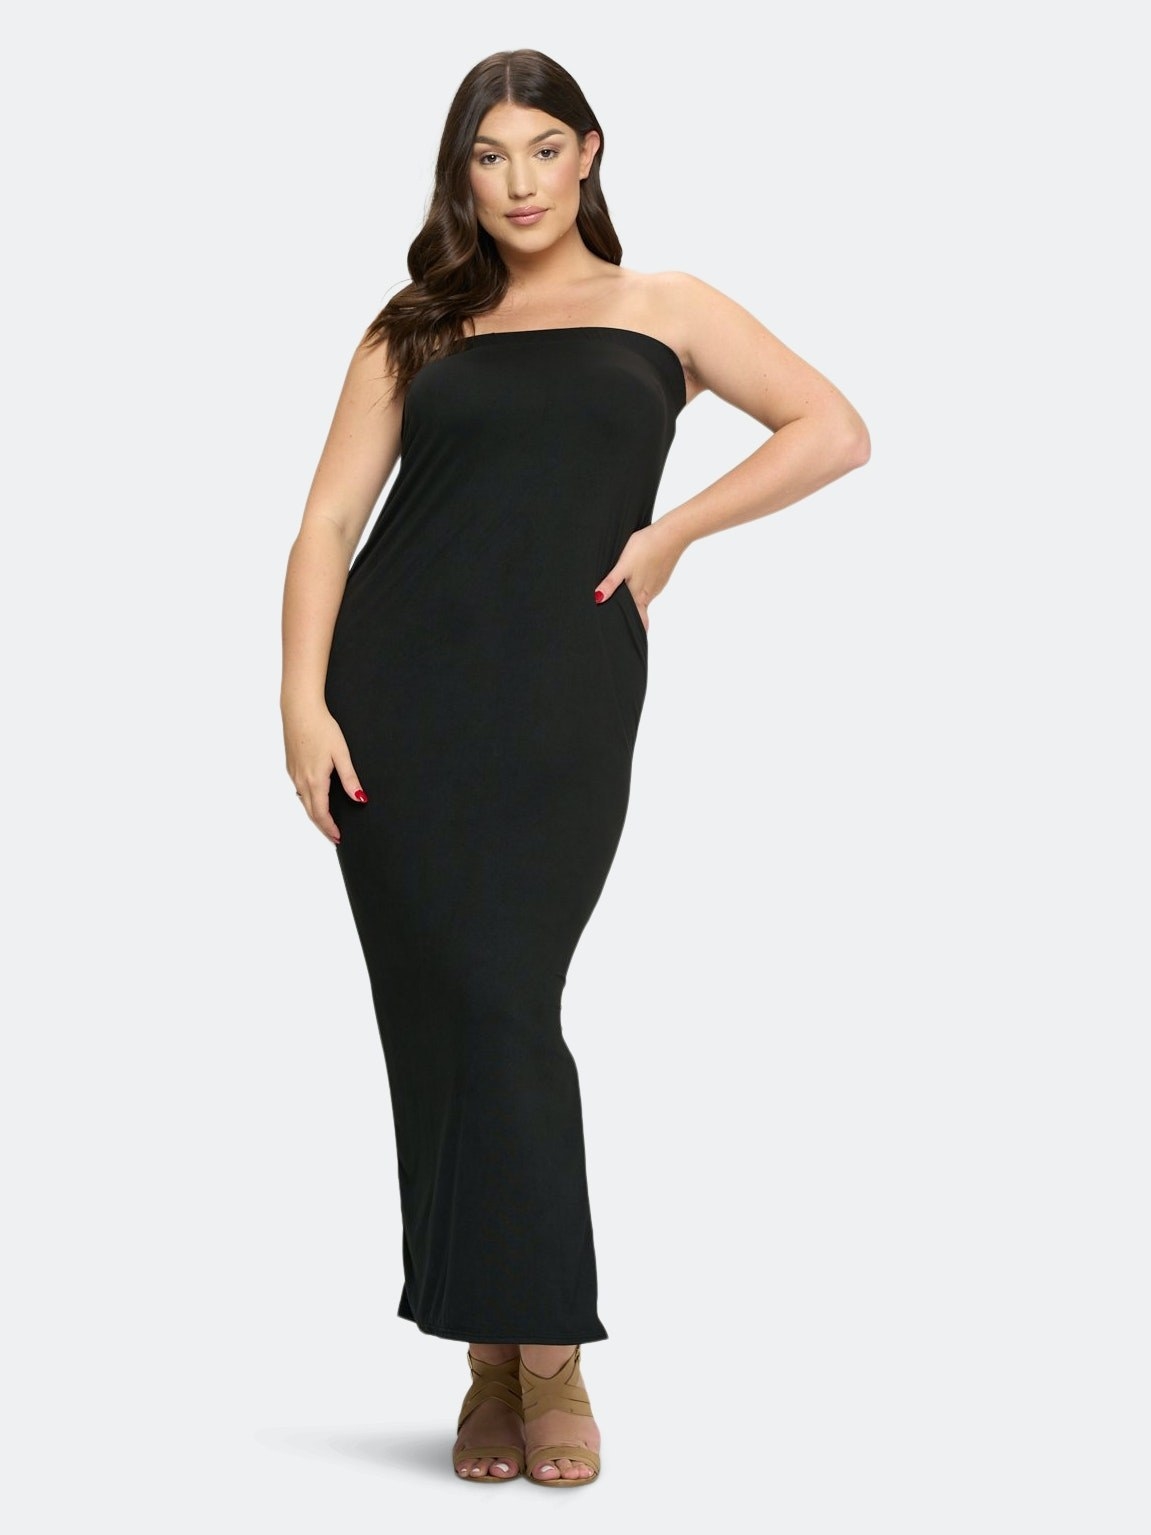 model wearing a black sleeveless maxi dress